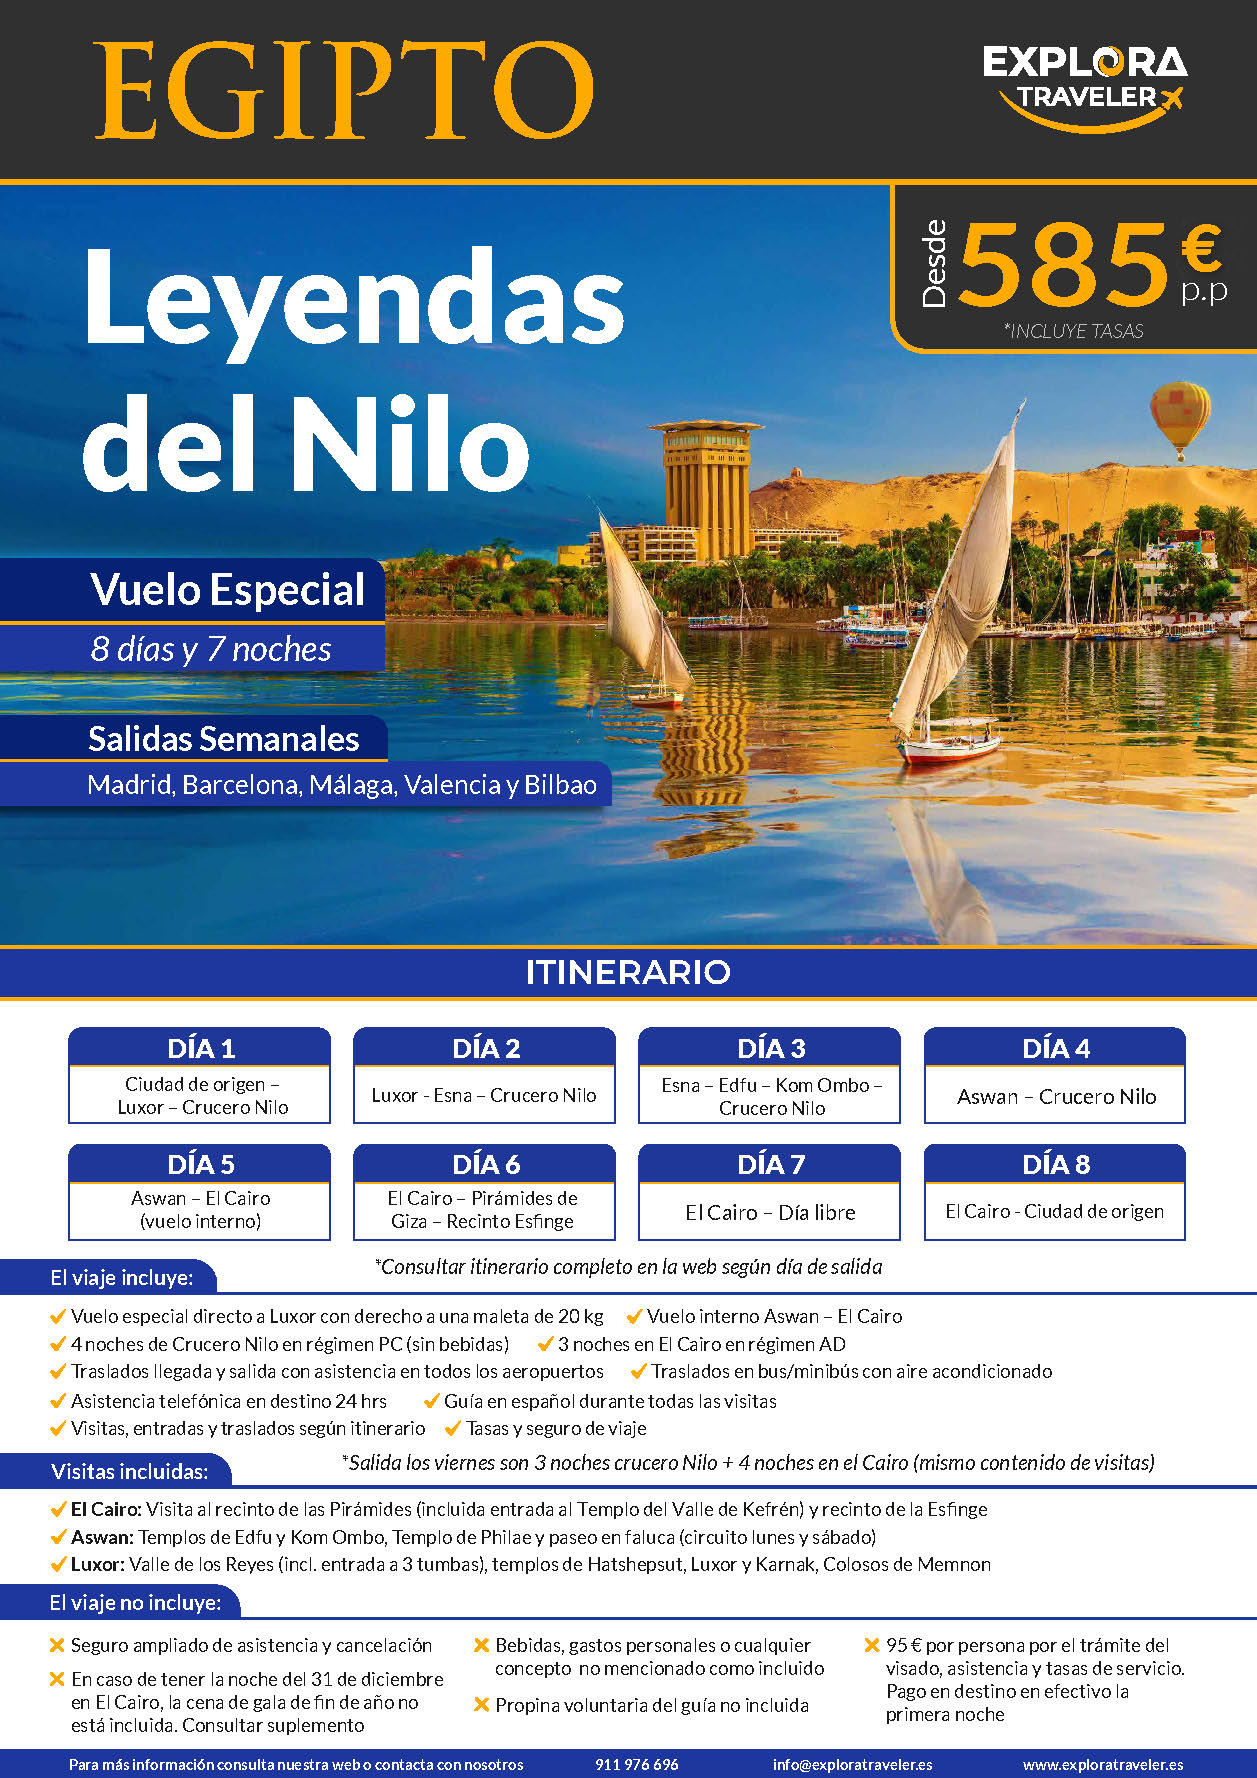 Oferta Explora Traveler Egipto Charter Leyendas del Nilo 8 dias salidas 2024 vuelo directo desde Madrid Barcelona Bilbao Malaga y Valencia